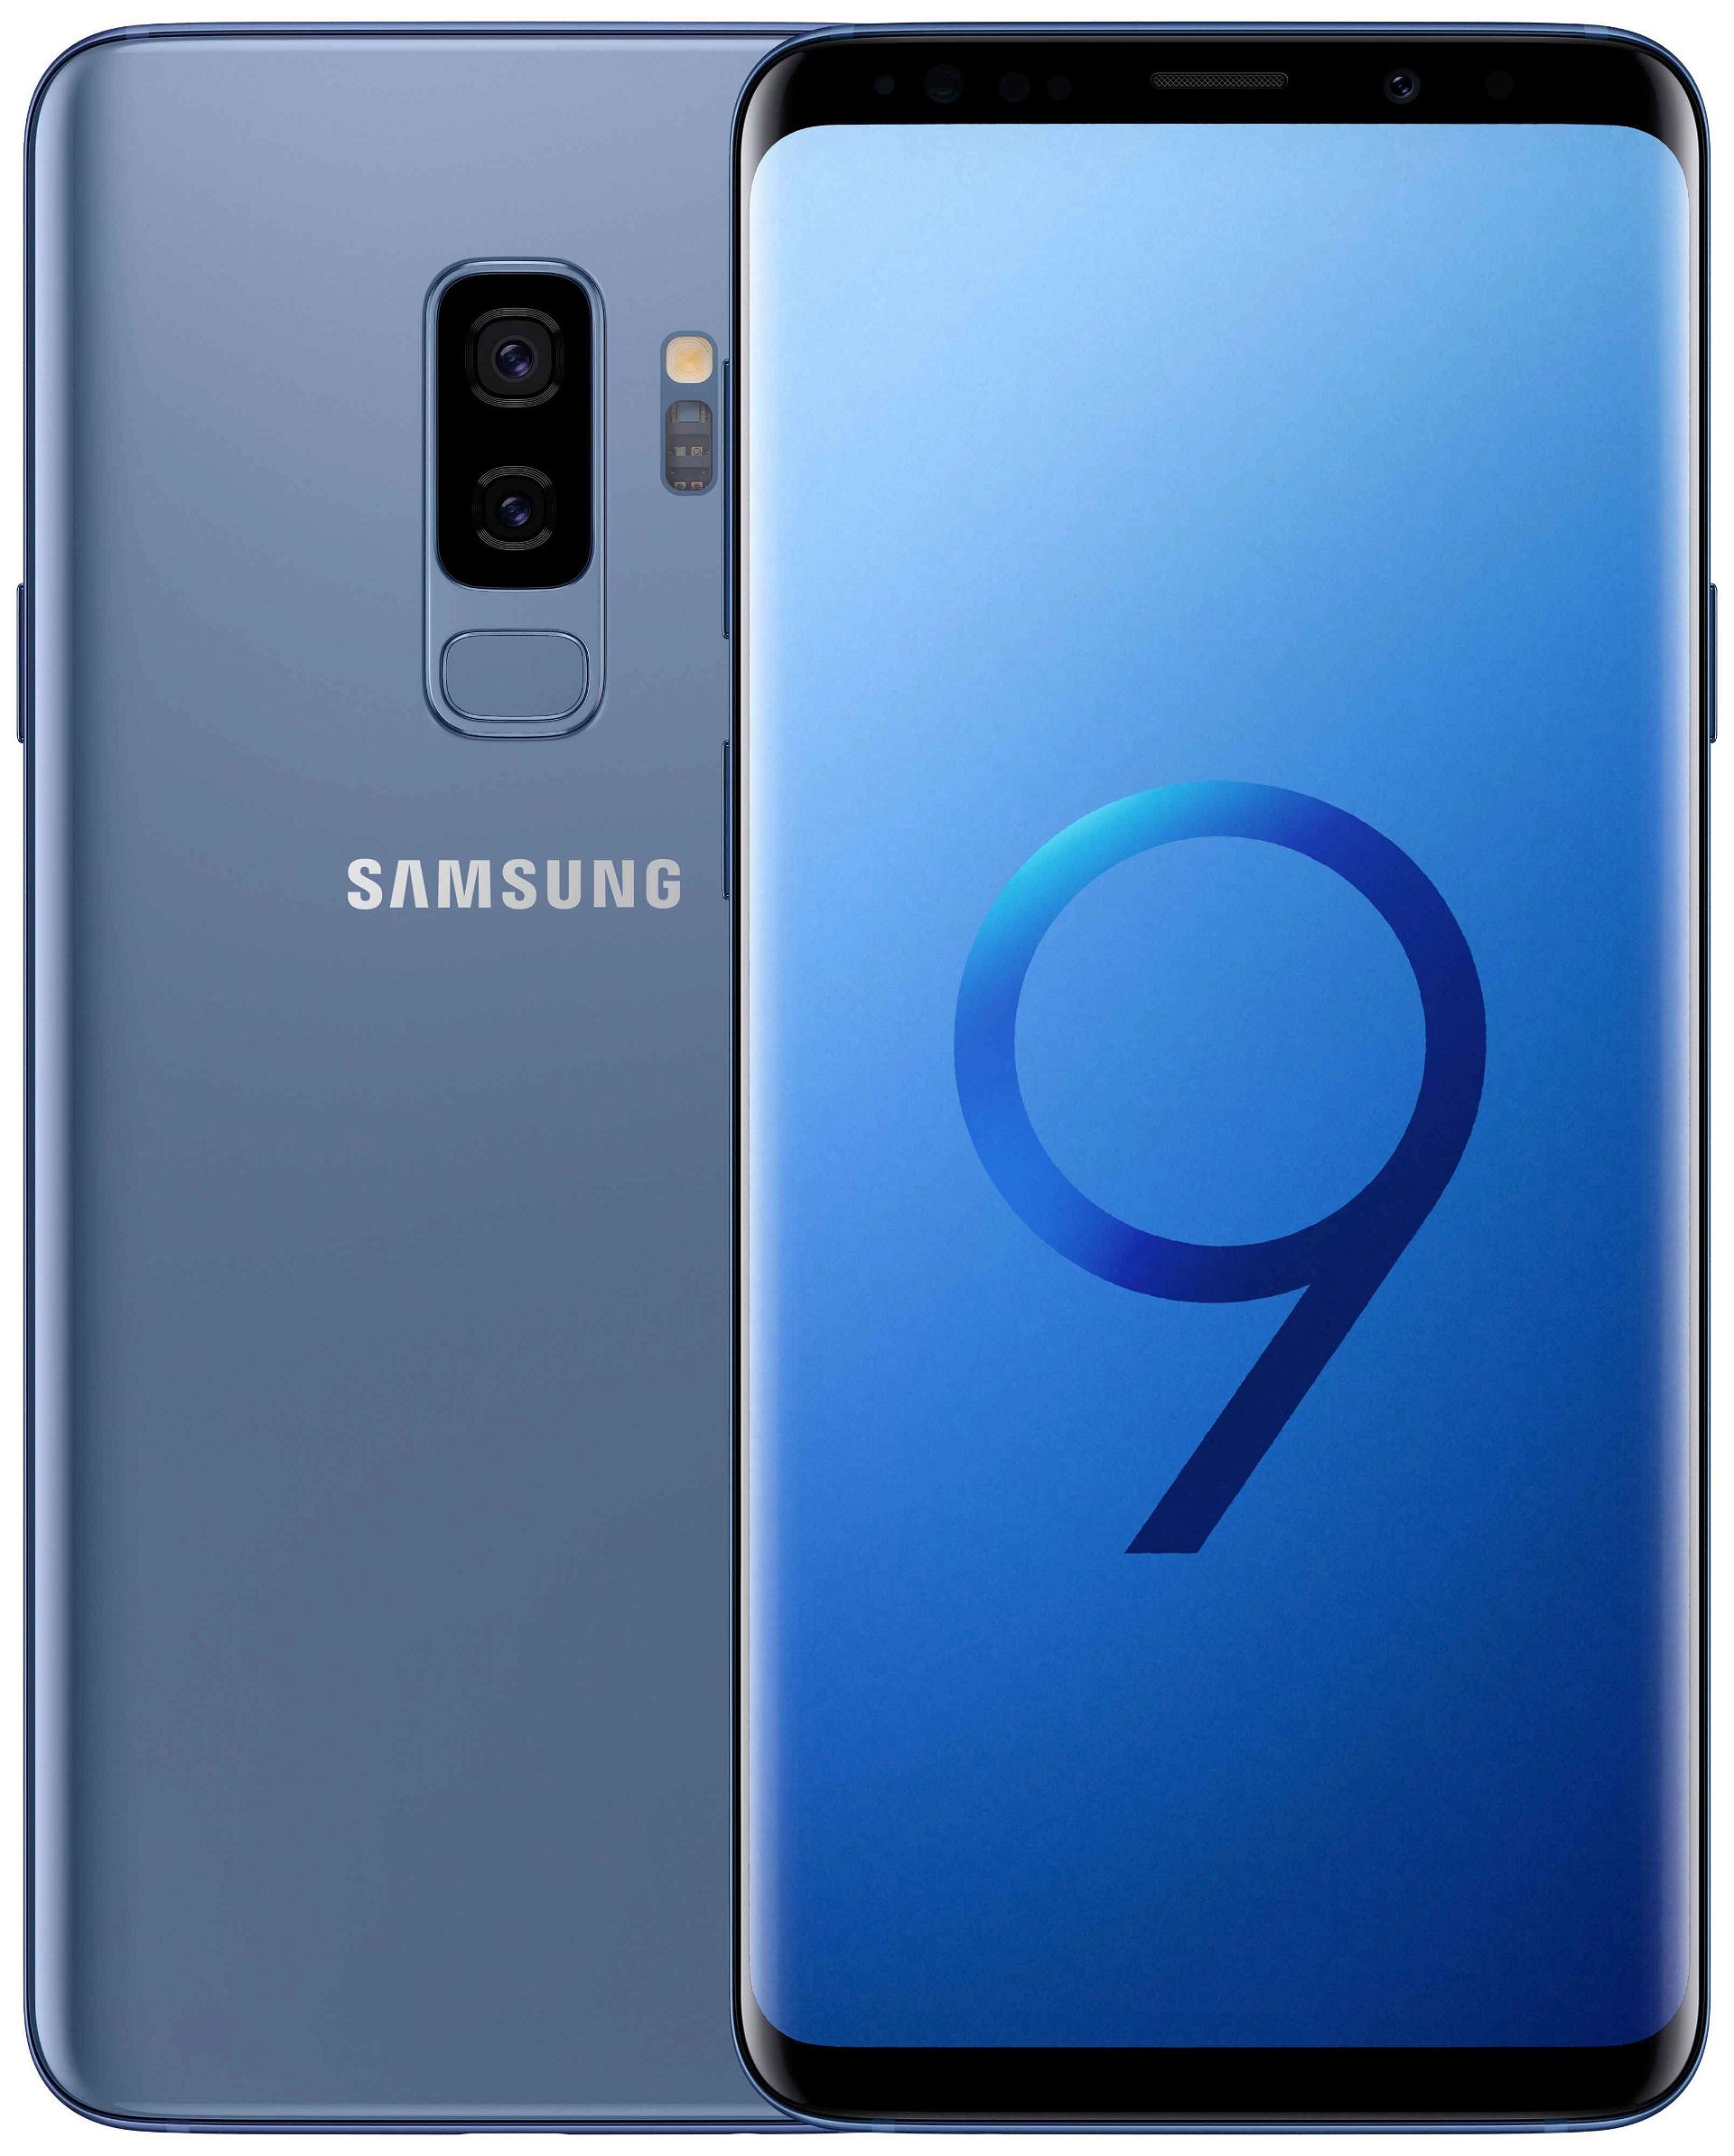 6 samsung galaxy s9. Samsung Galaxy s9 64gb. Samsung Galaxy s9 Plus. Samsung Galaxy s9 128gb. Samsung Galaxy s9 Edge.